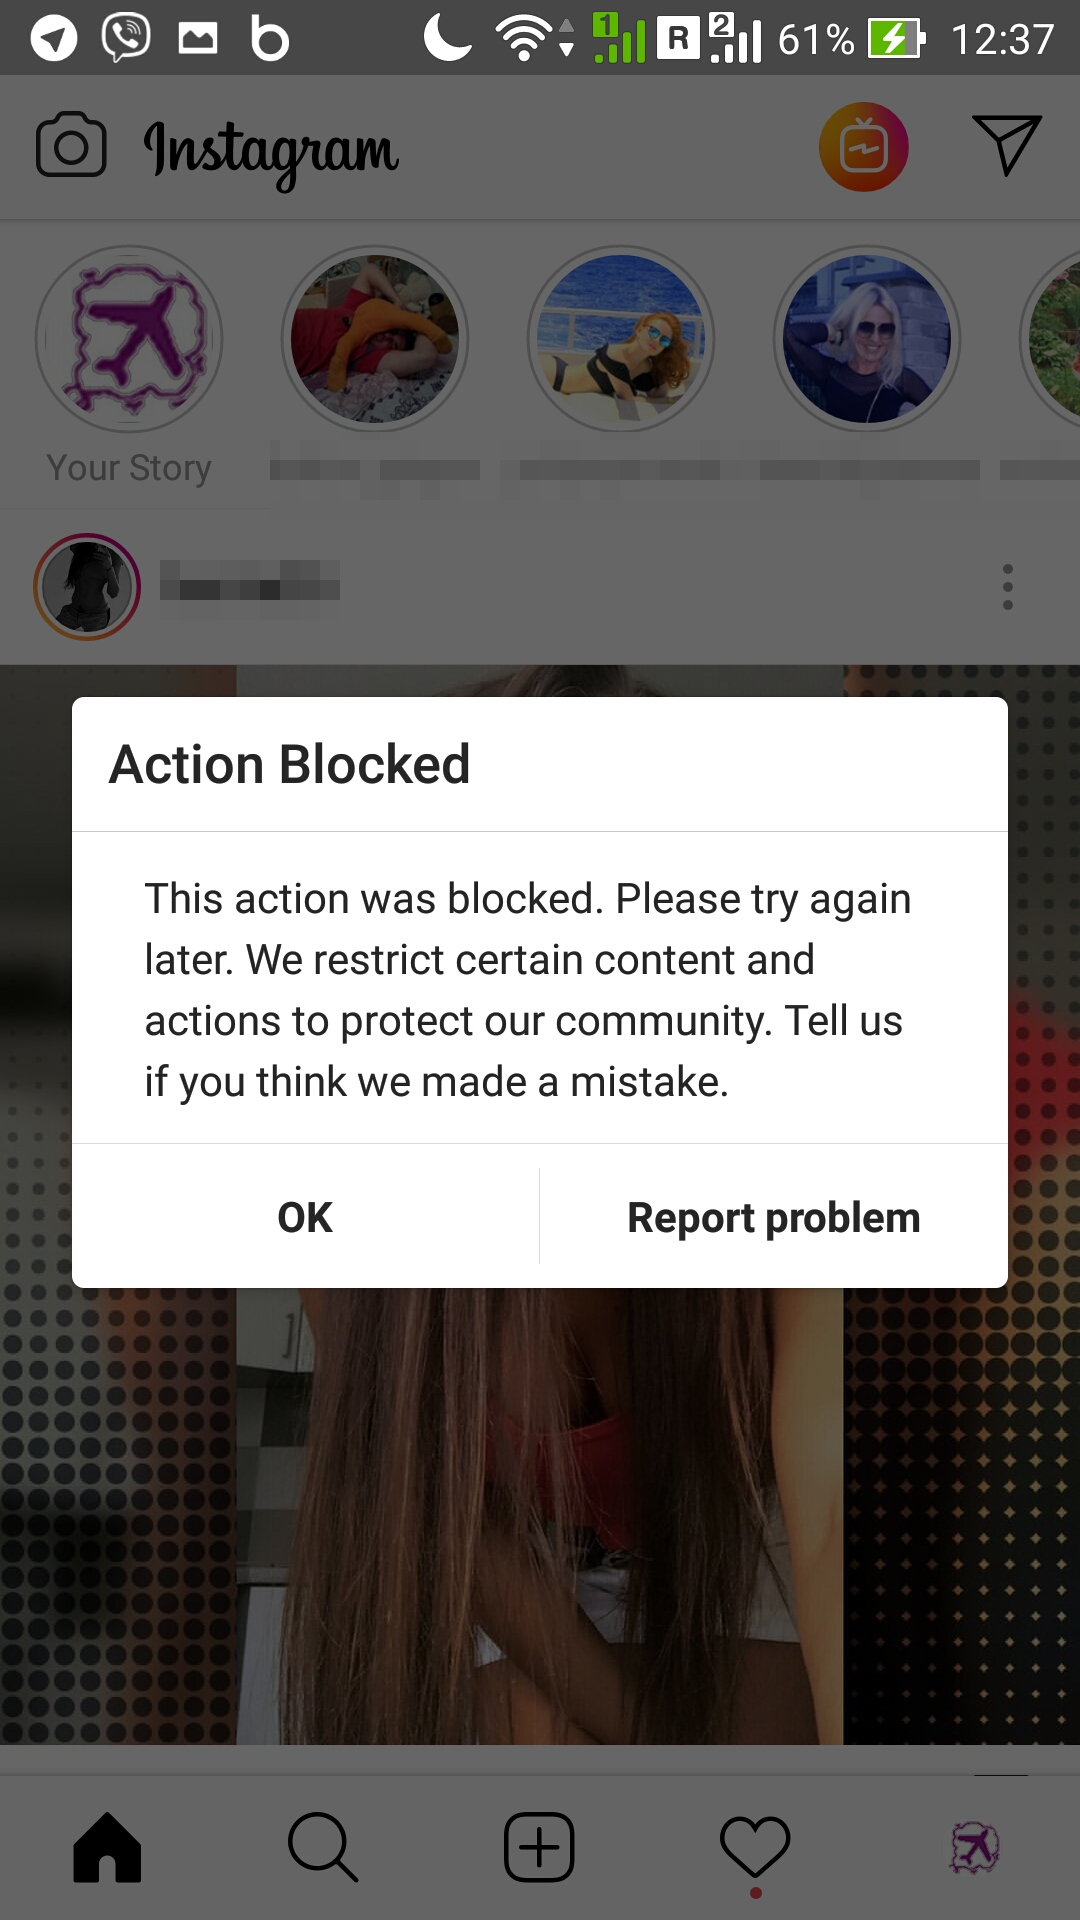 Instagram action blocked : Instagram temporarily blocked